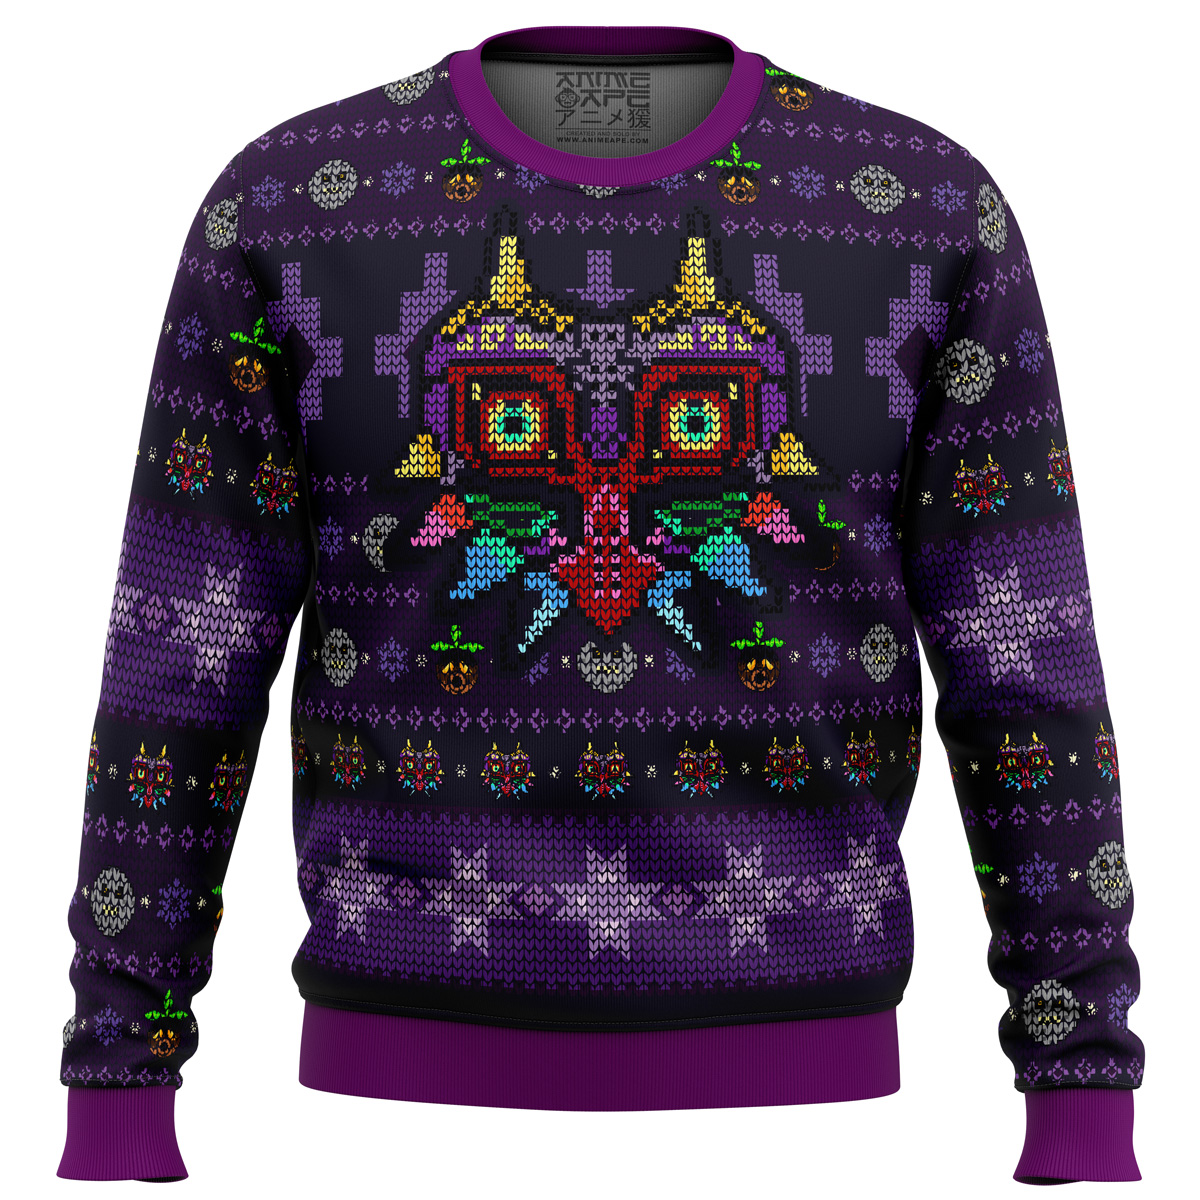 majoras mask seamless pattern legend of zelda ugly christmas sweater ana2207 8676 - Fandomaniax Store